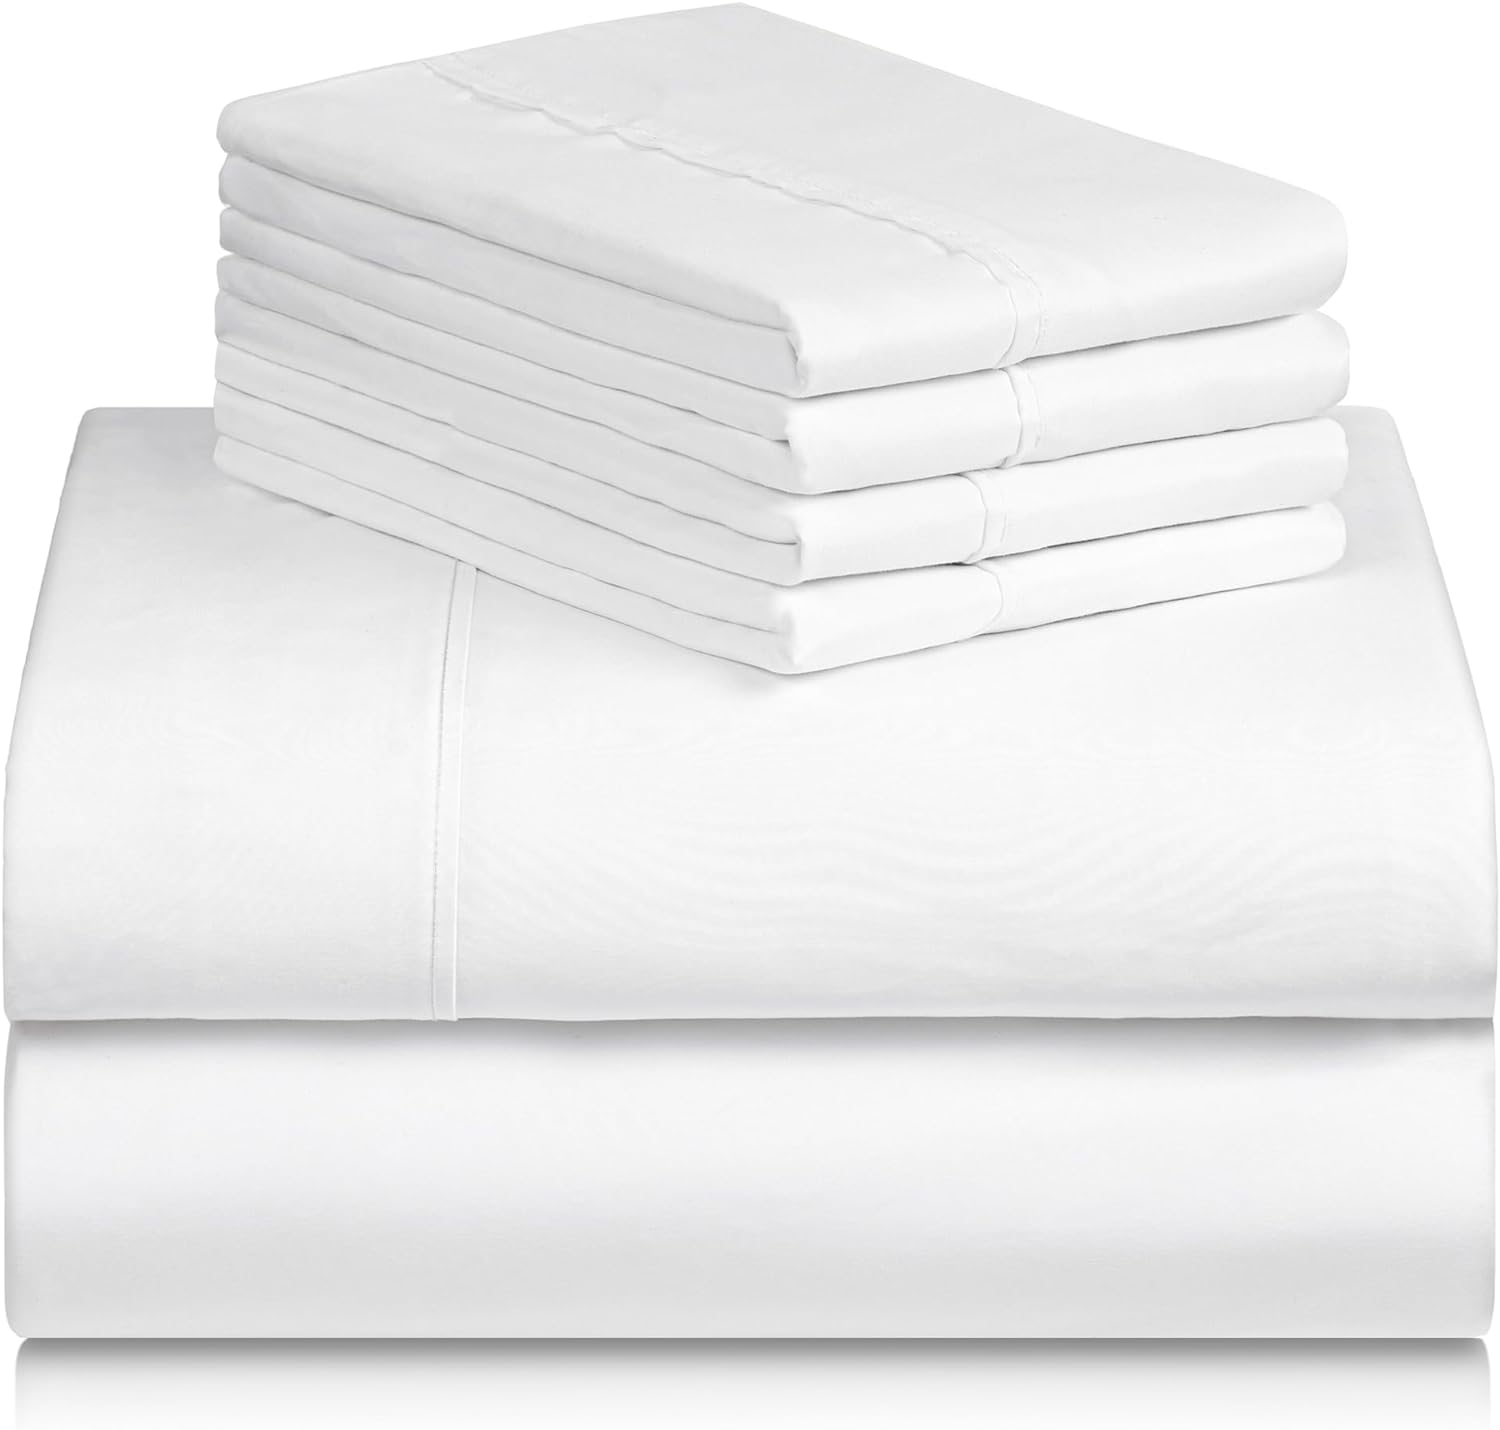 Luxurious Bedsheet Set With Deep Pocket Design